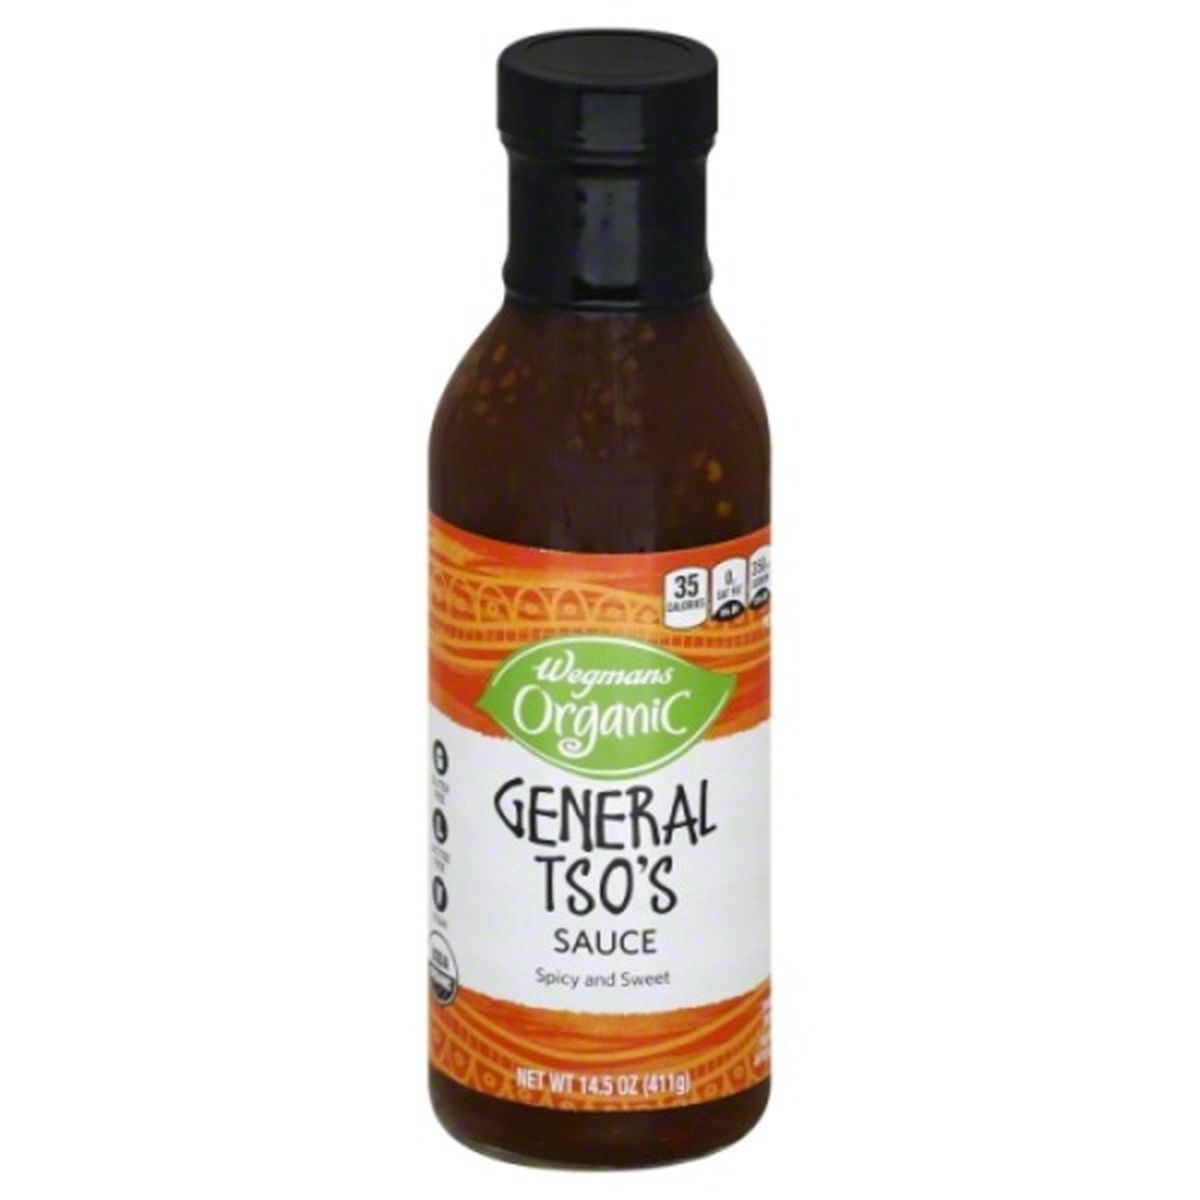 Calories in Wegmans Organic General Tso's Sauce